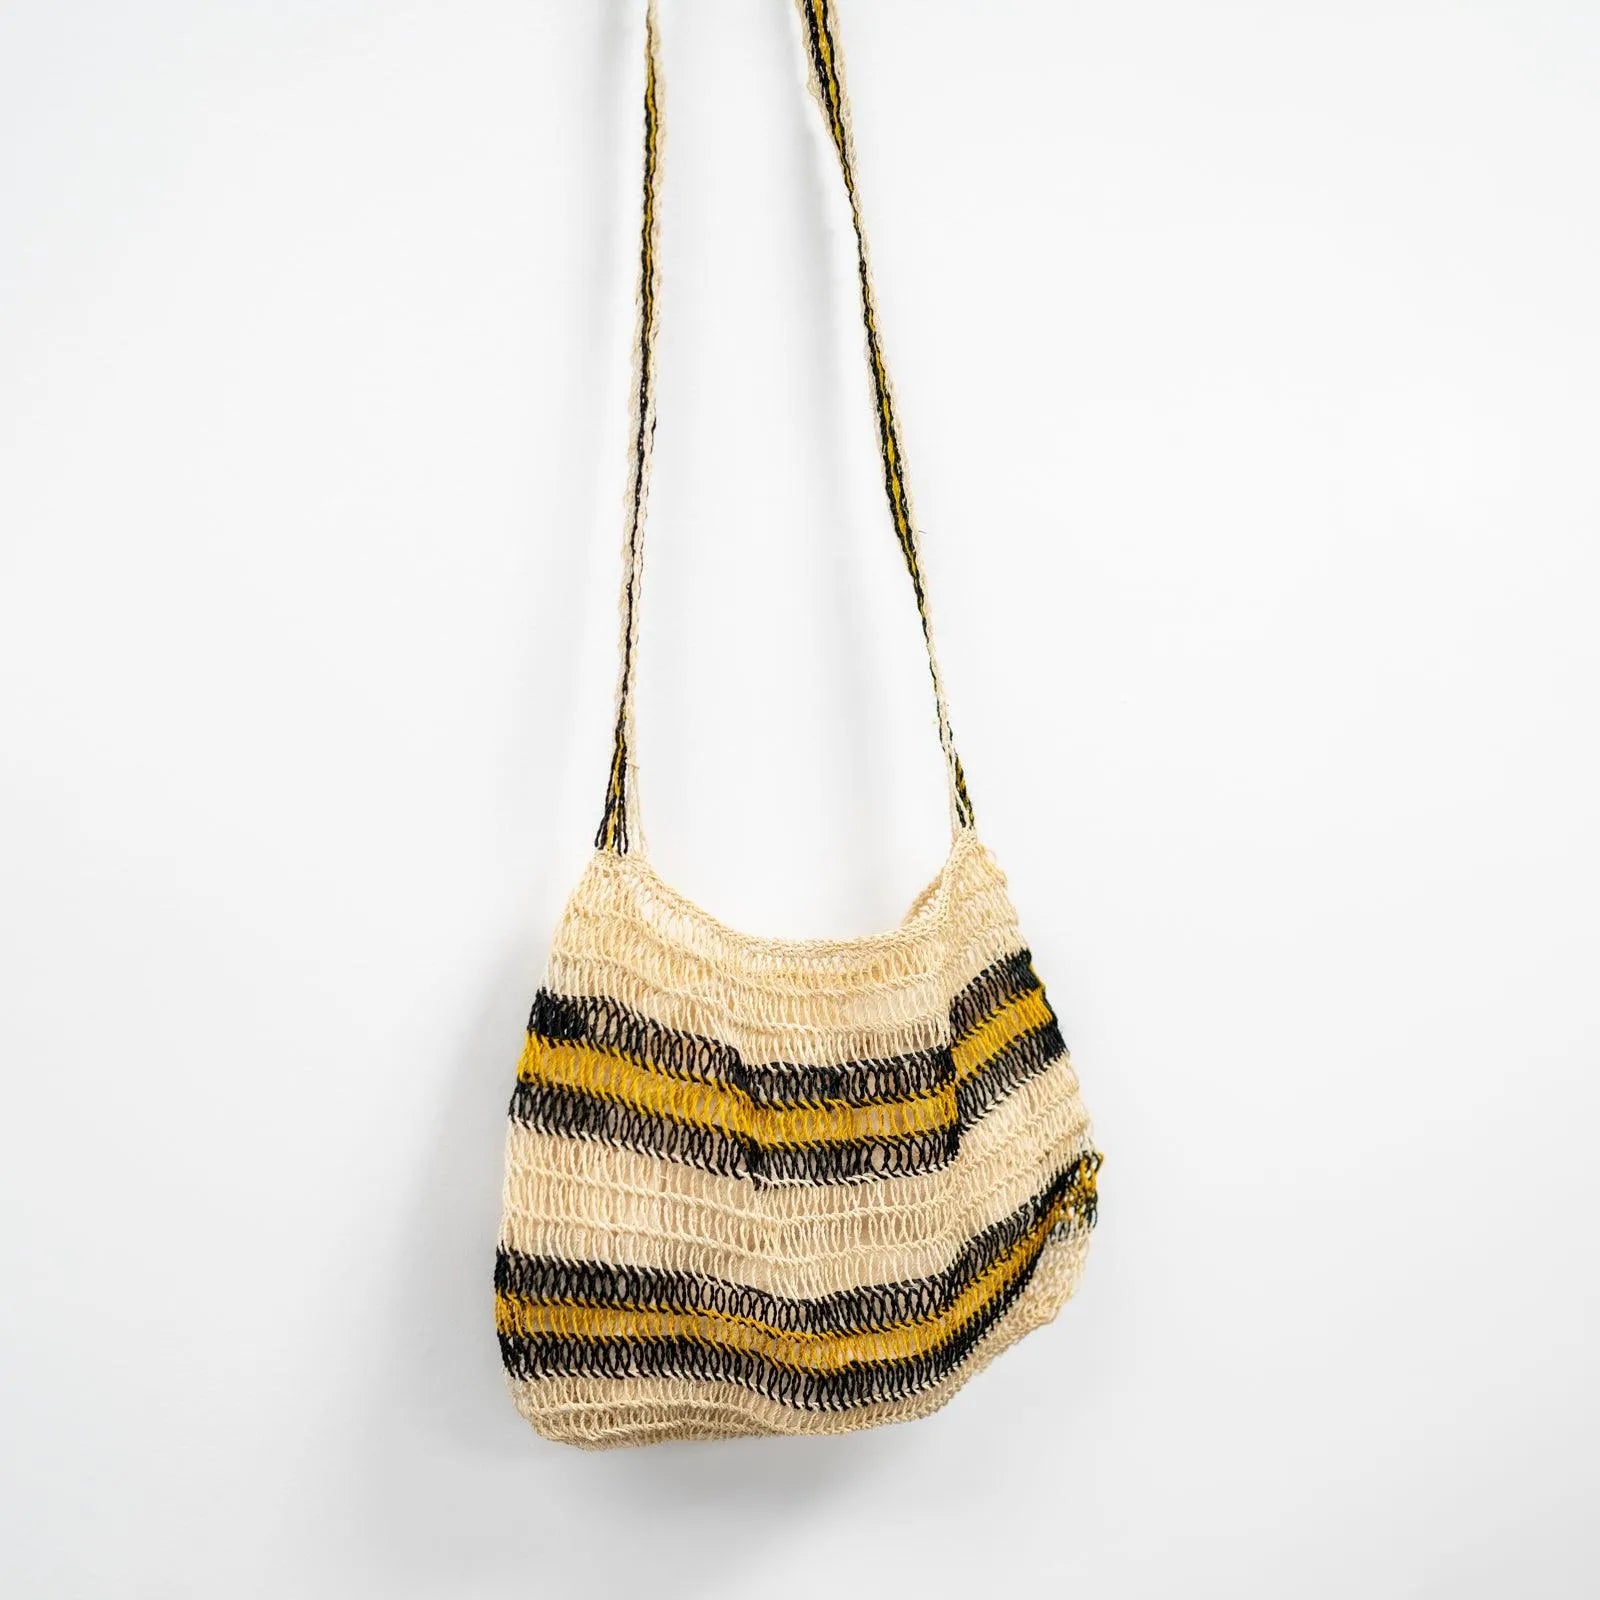 handmade-chambira-tote-bag-from-peru-luna-sundara-3 - Luna Sundara